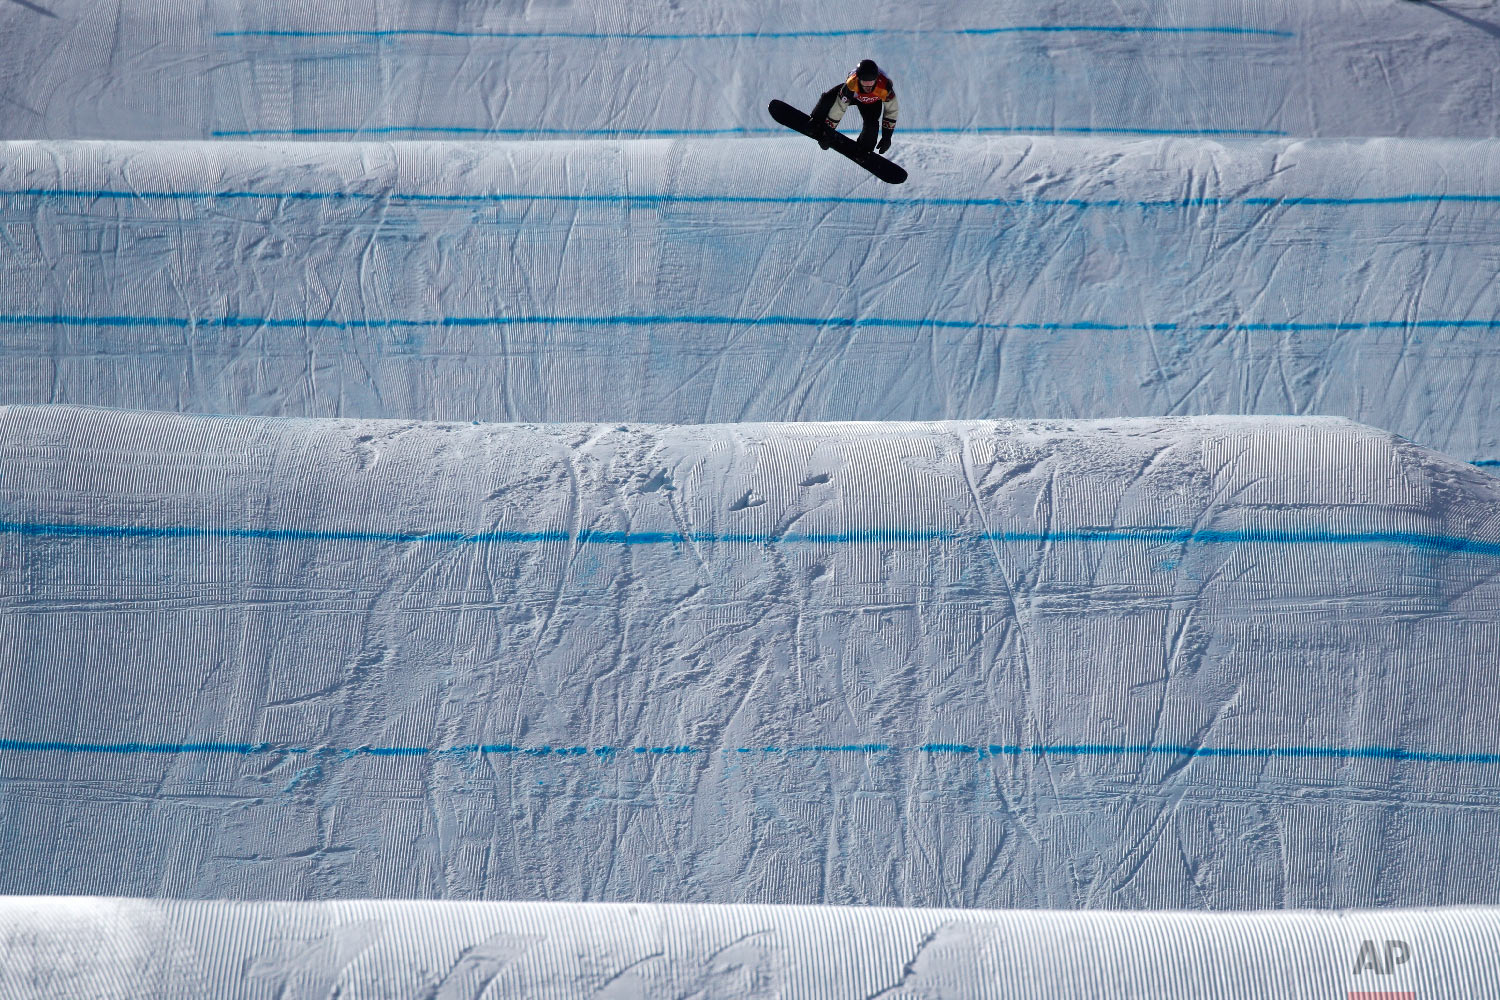  Max Parrot, of Canada, jumps during the men's slopestyle final at Phoenix Snow Park at the 2018 Winter Olympics in Pyeongchang, South Korea, Sunday, Feb. 11, 2018. (AP Photo/Jae C. Hong) 